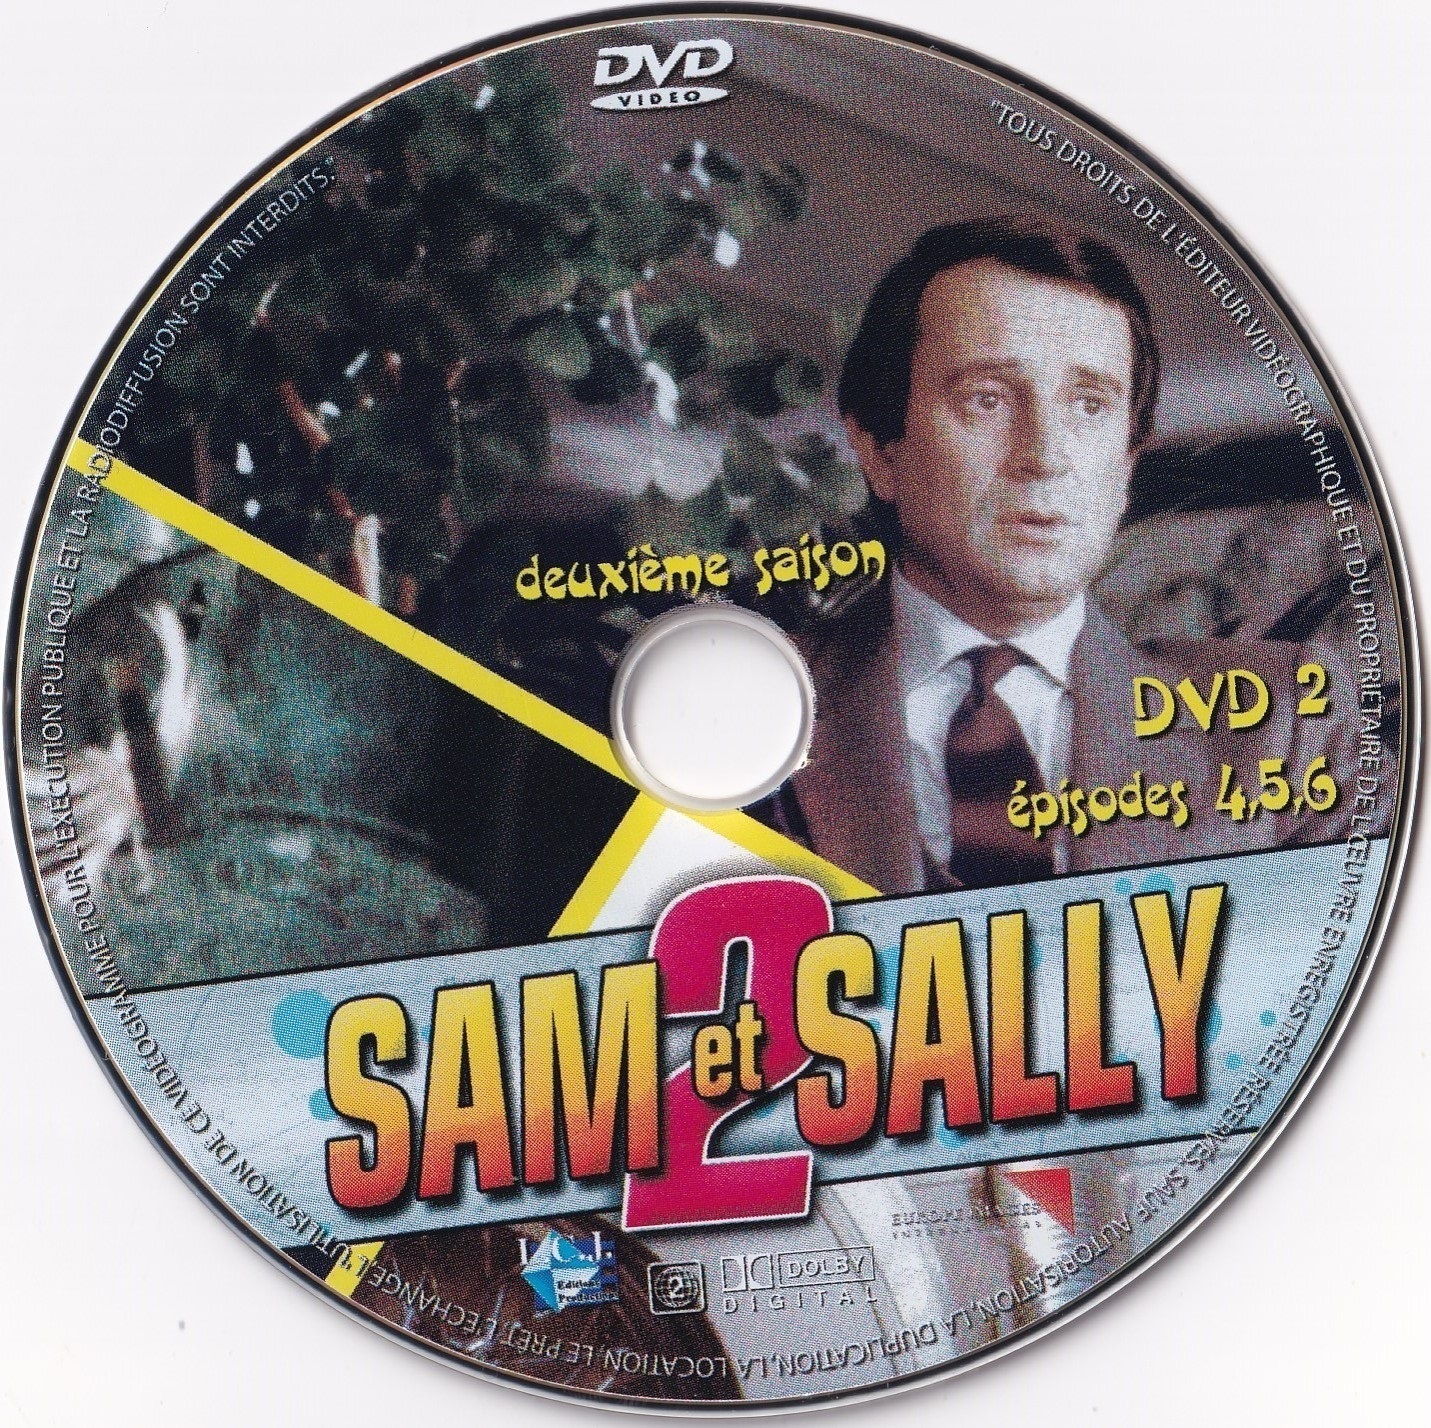 Sam et Sally Saison 2 DVD 2